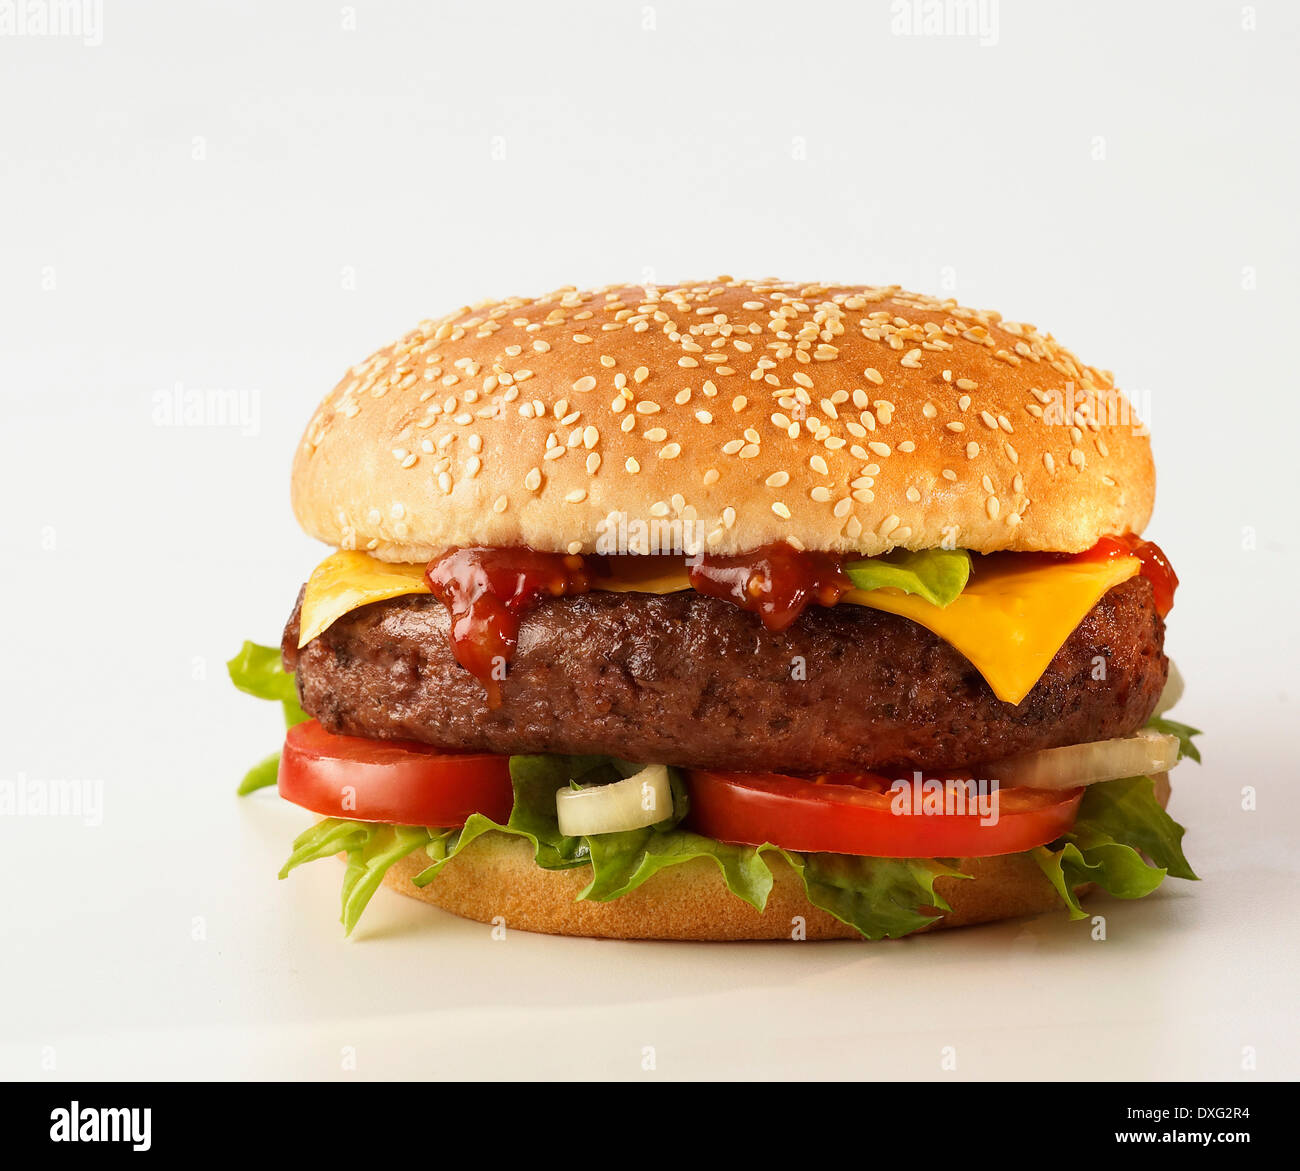 Cheeseburger On White Background Stock Photo